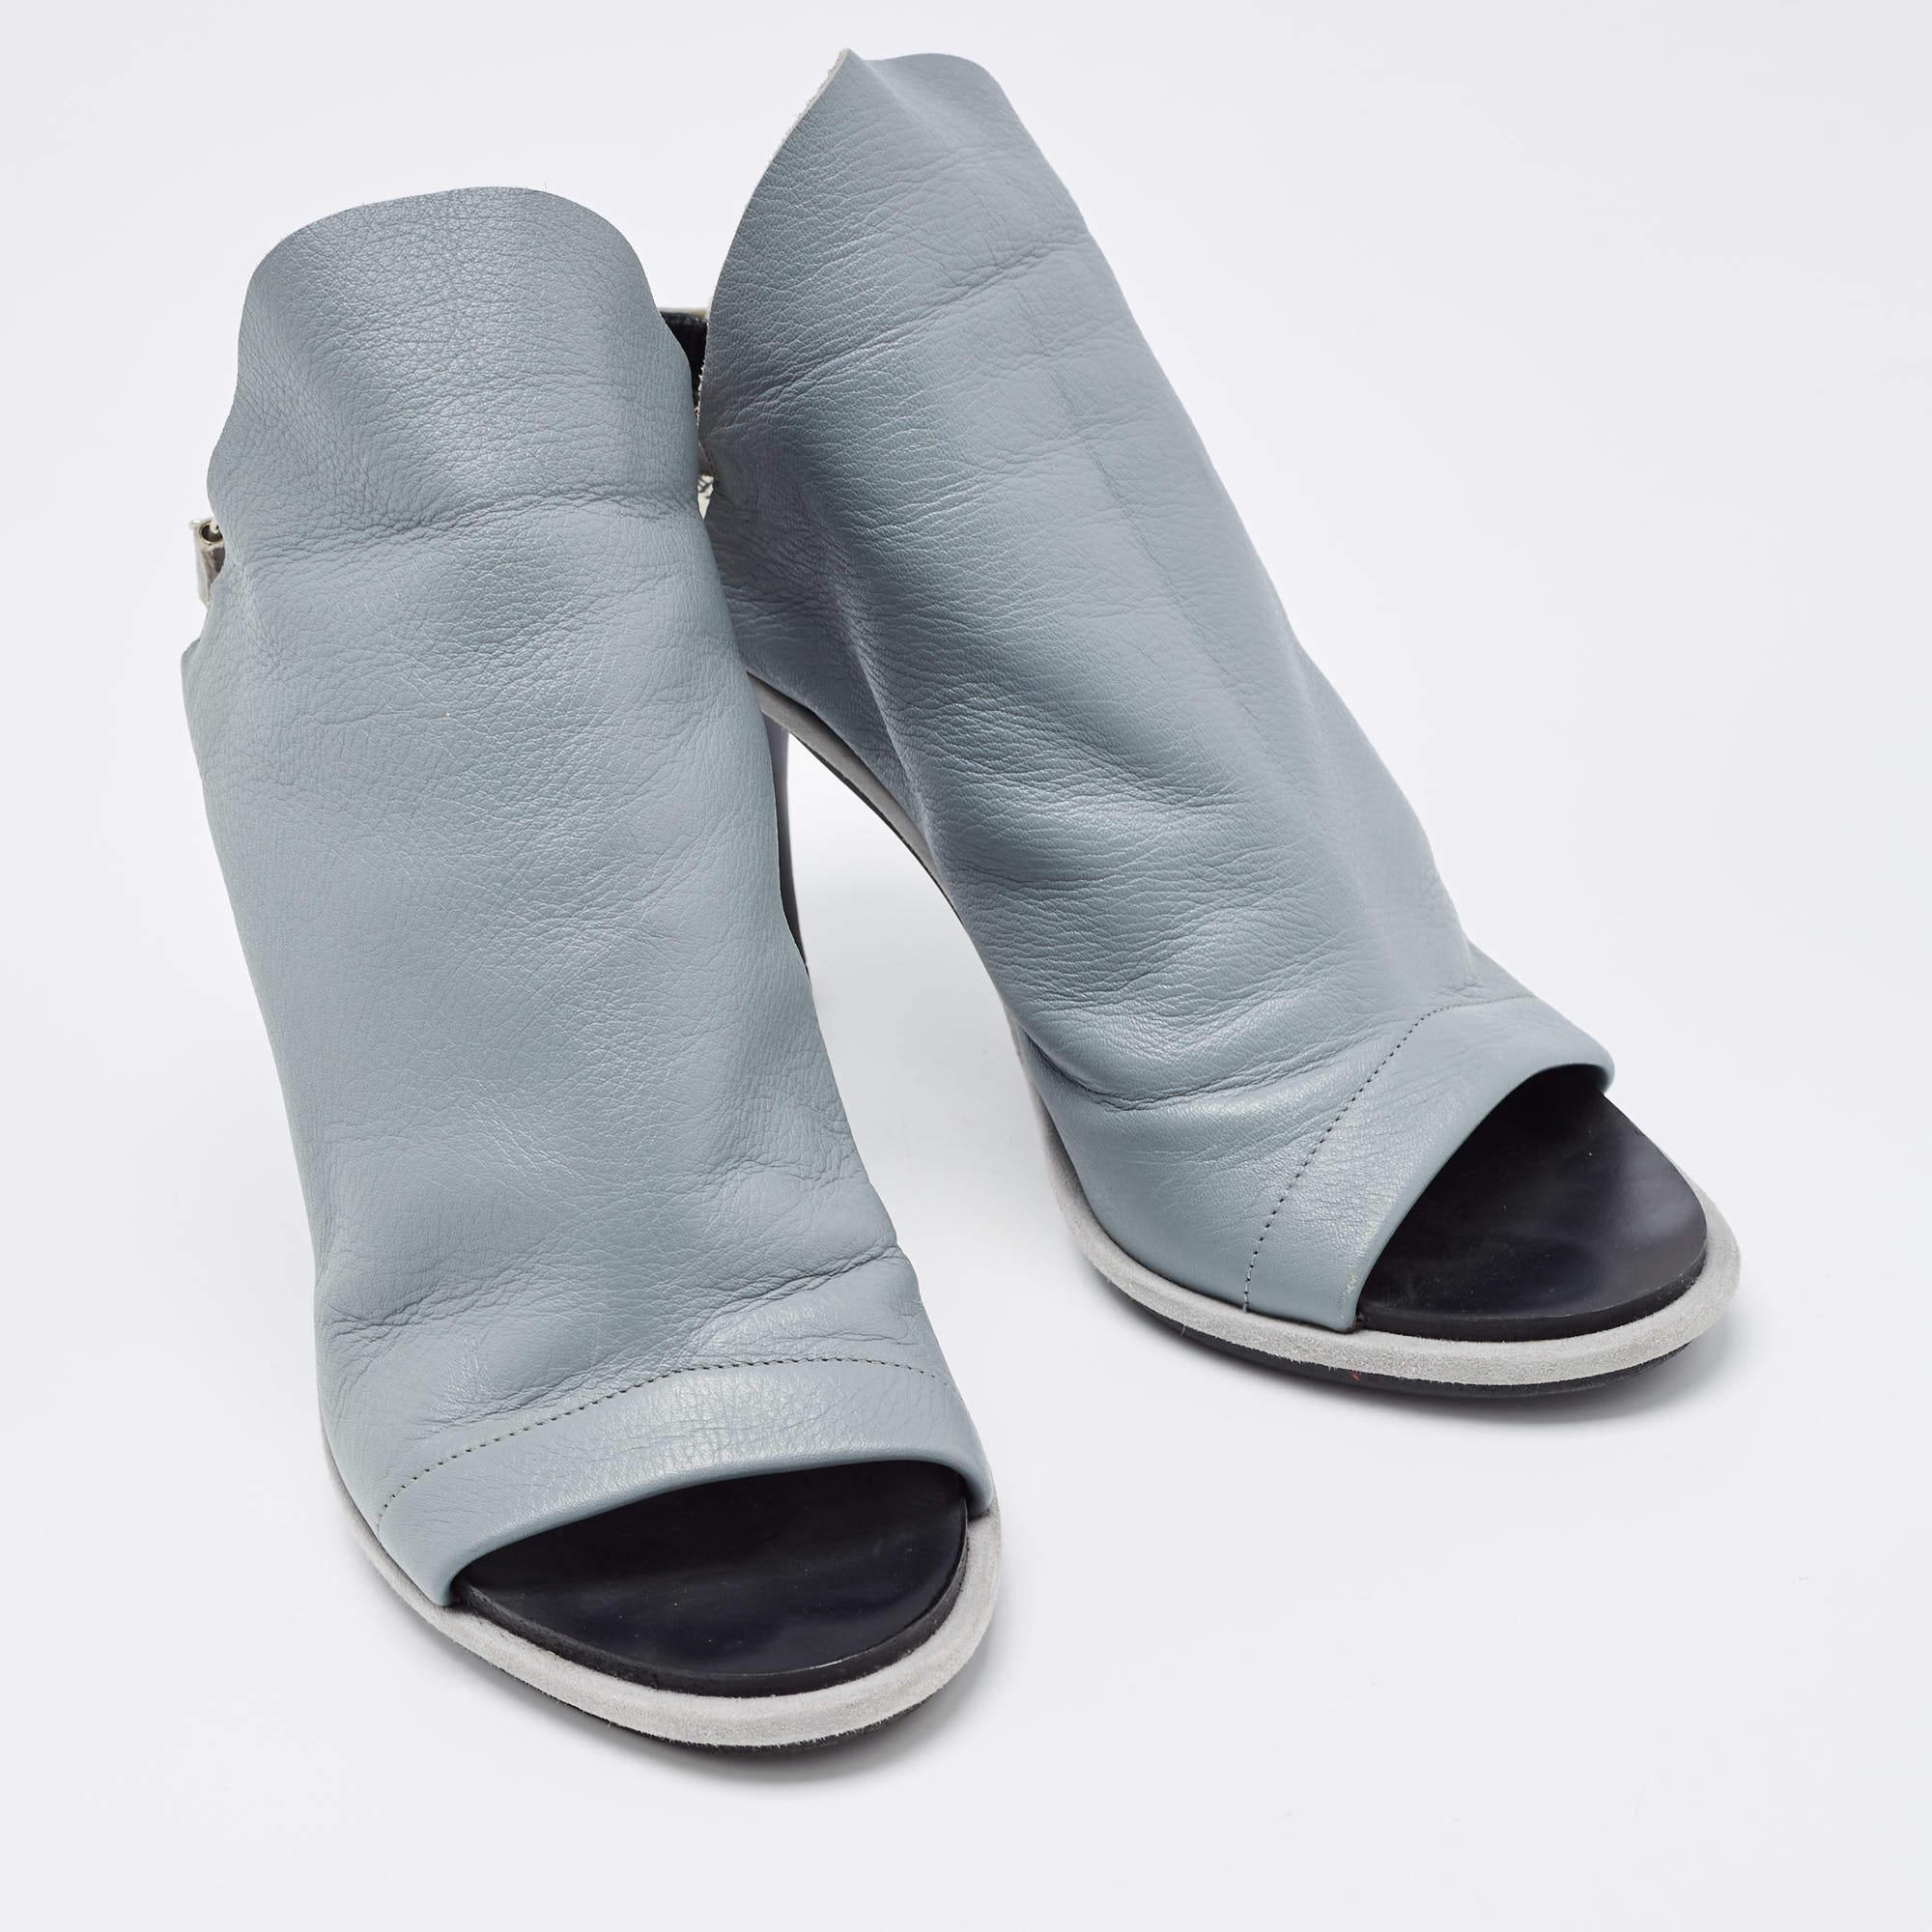 Balenciaga Grey Suede and Leather Glove Sandals Size 39 In Good Condition For Sale In Dubai, Al Qouz 2